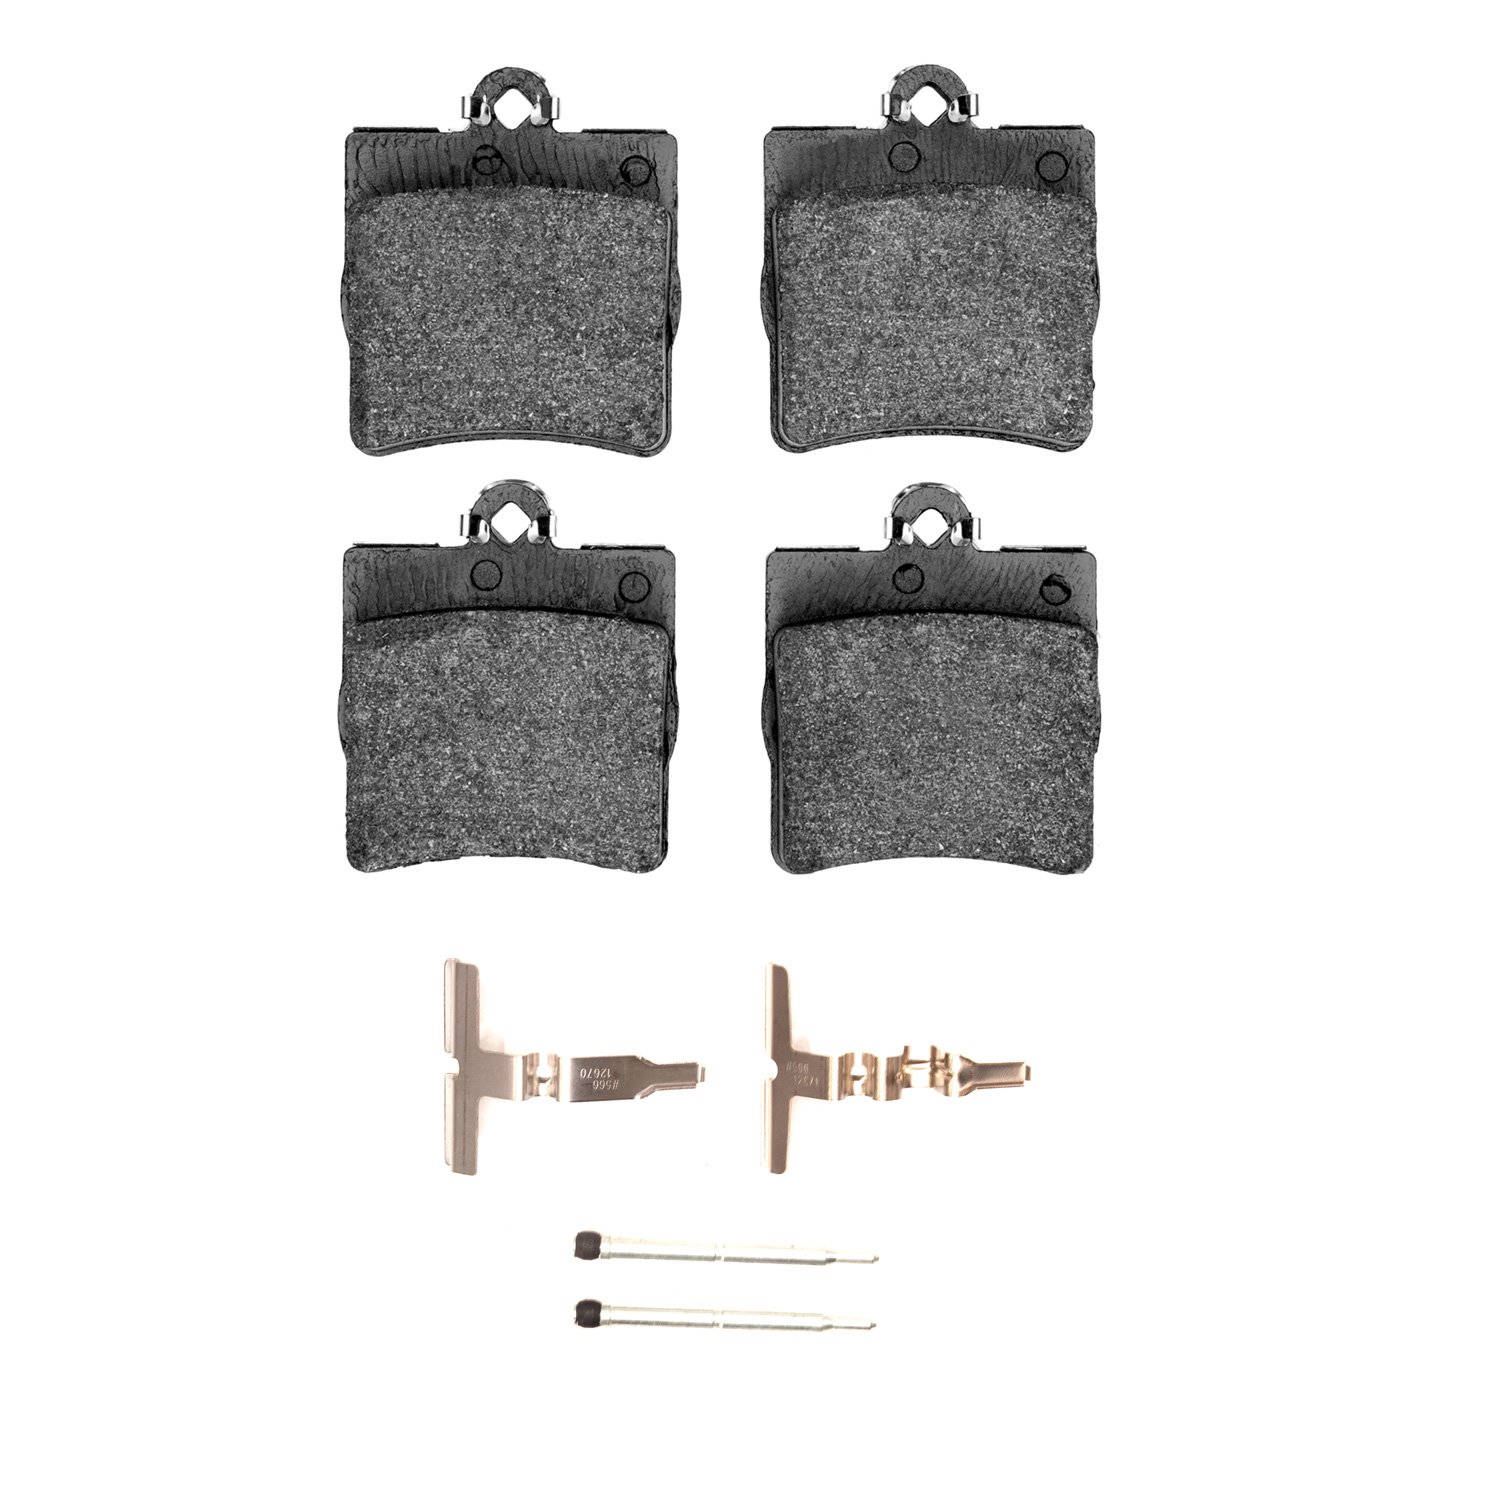 Ceramic Brake Pads & Hardware Kit, 1996-2015 Fits Multiple Makes/Models, Position: Rear